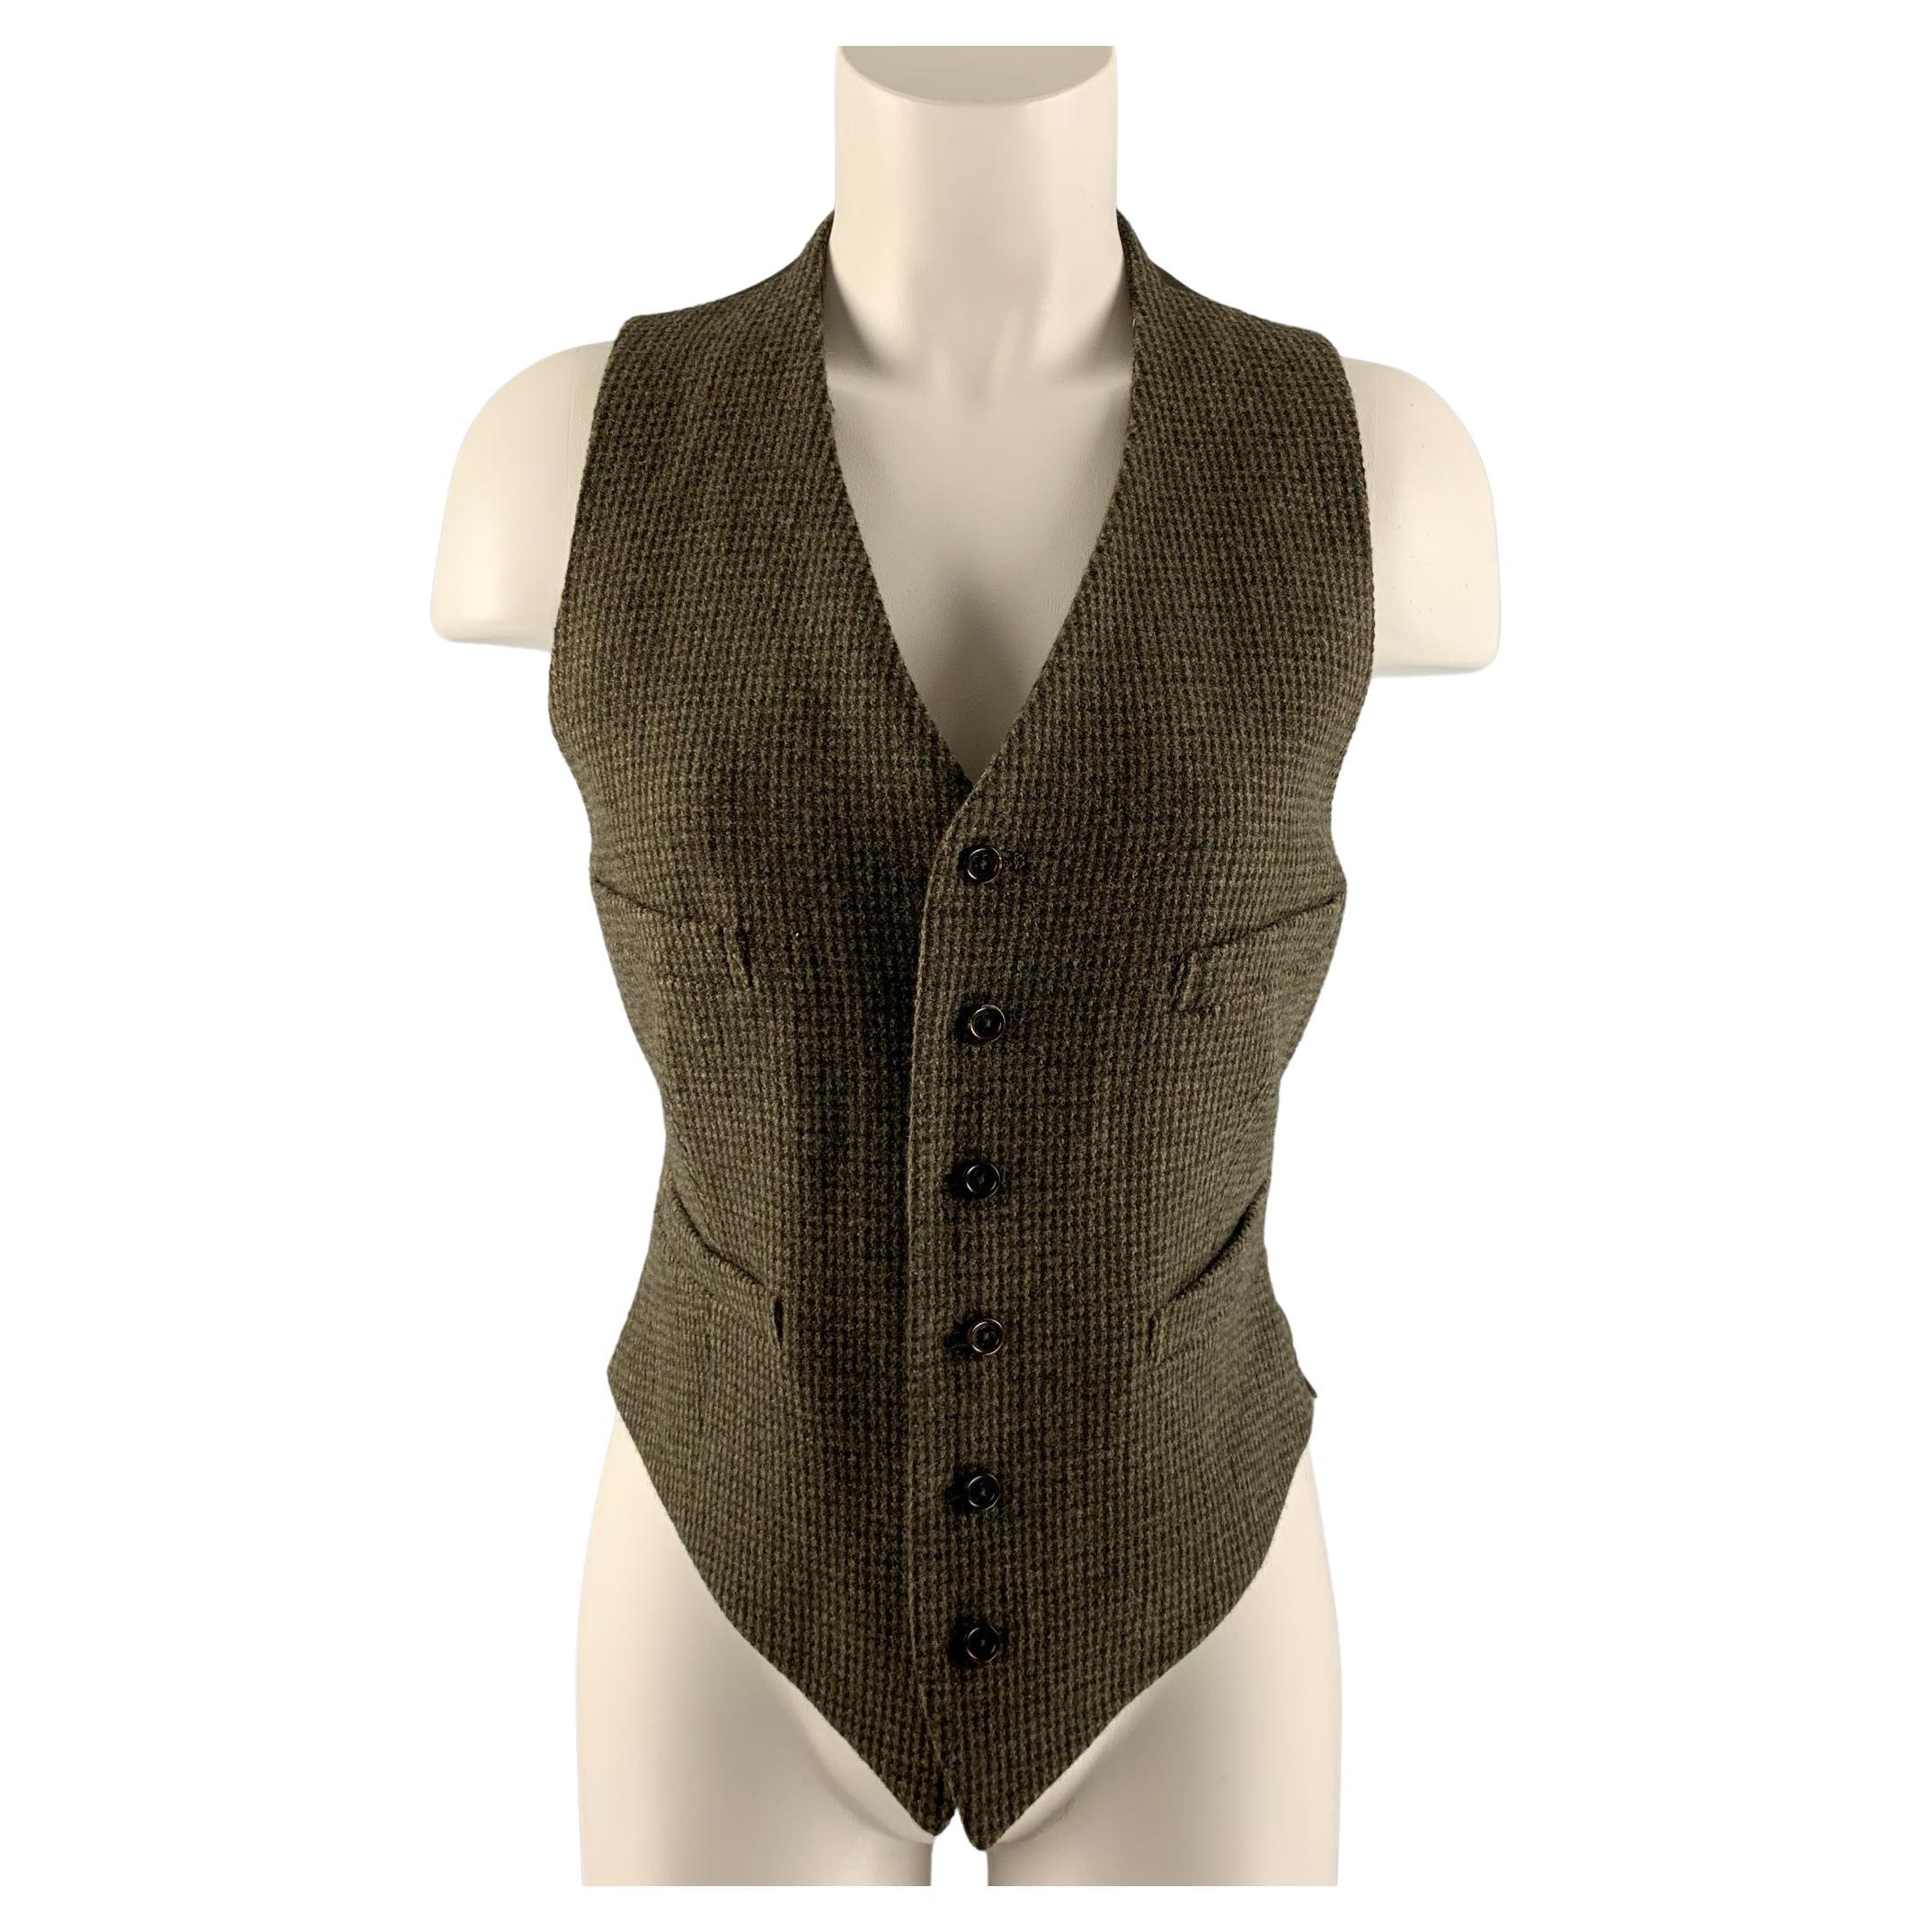 RALPH LAUREN Size 8 Olive & Taupe Wool Vest